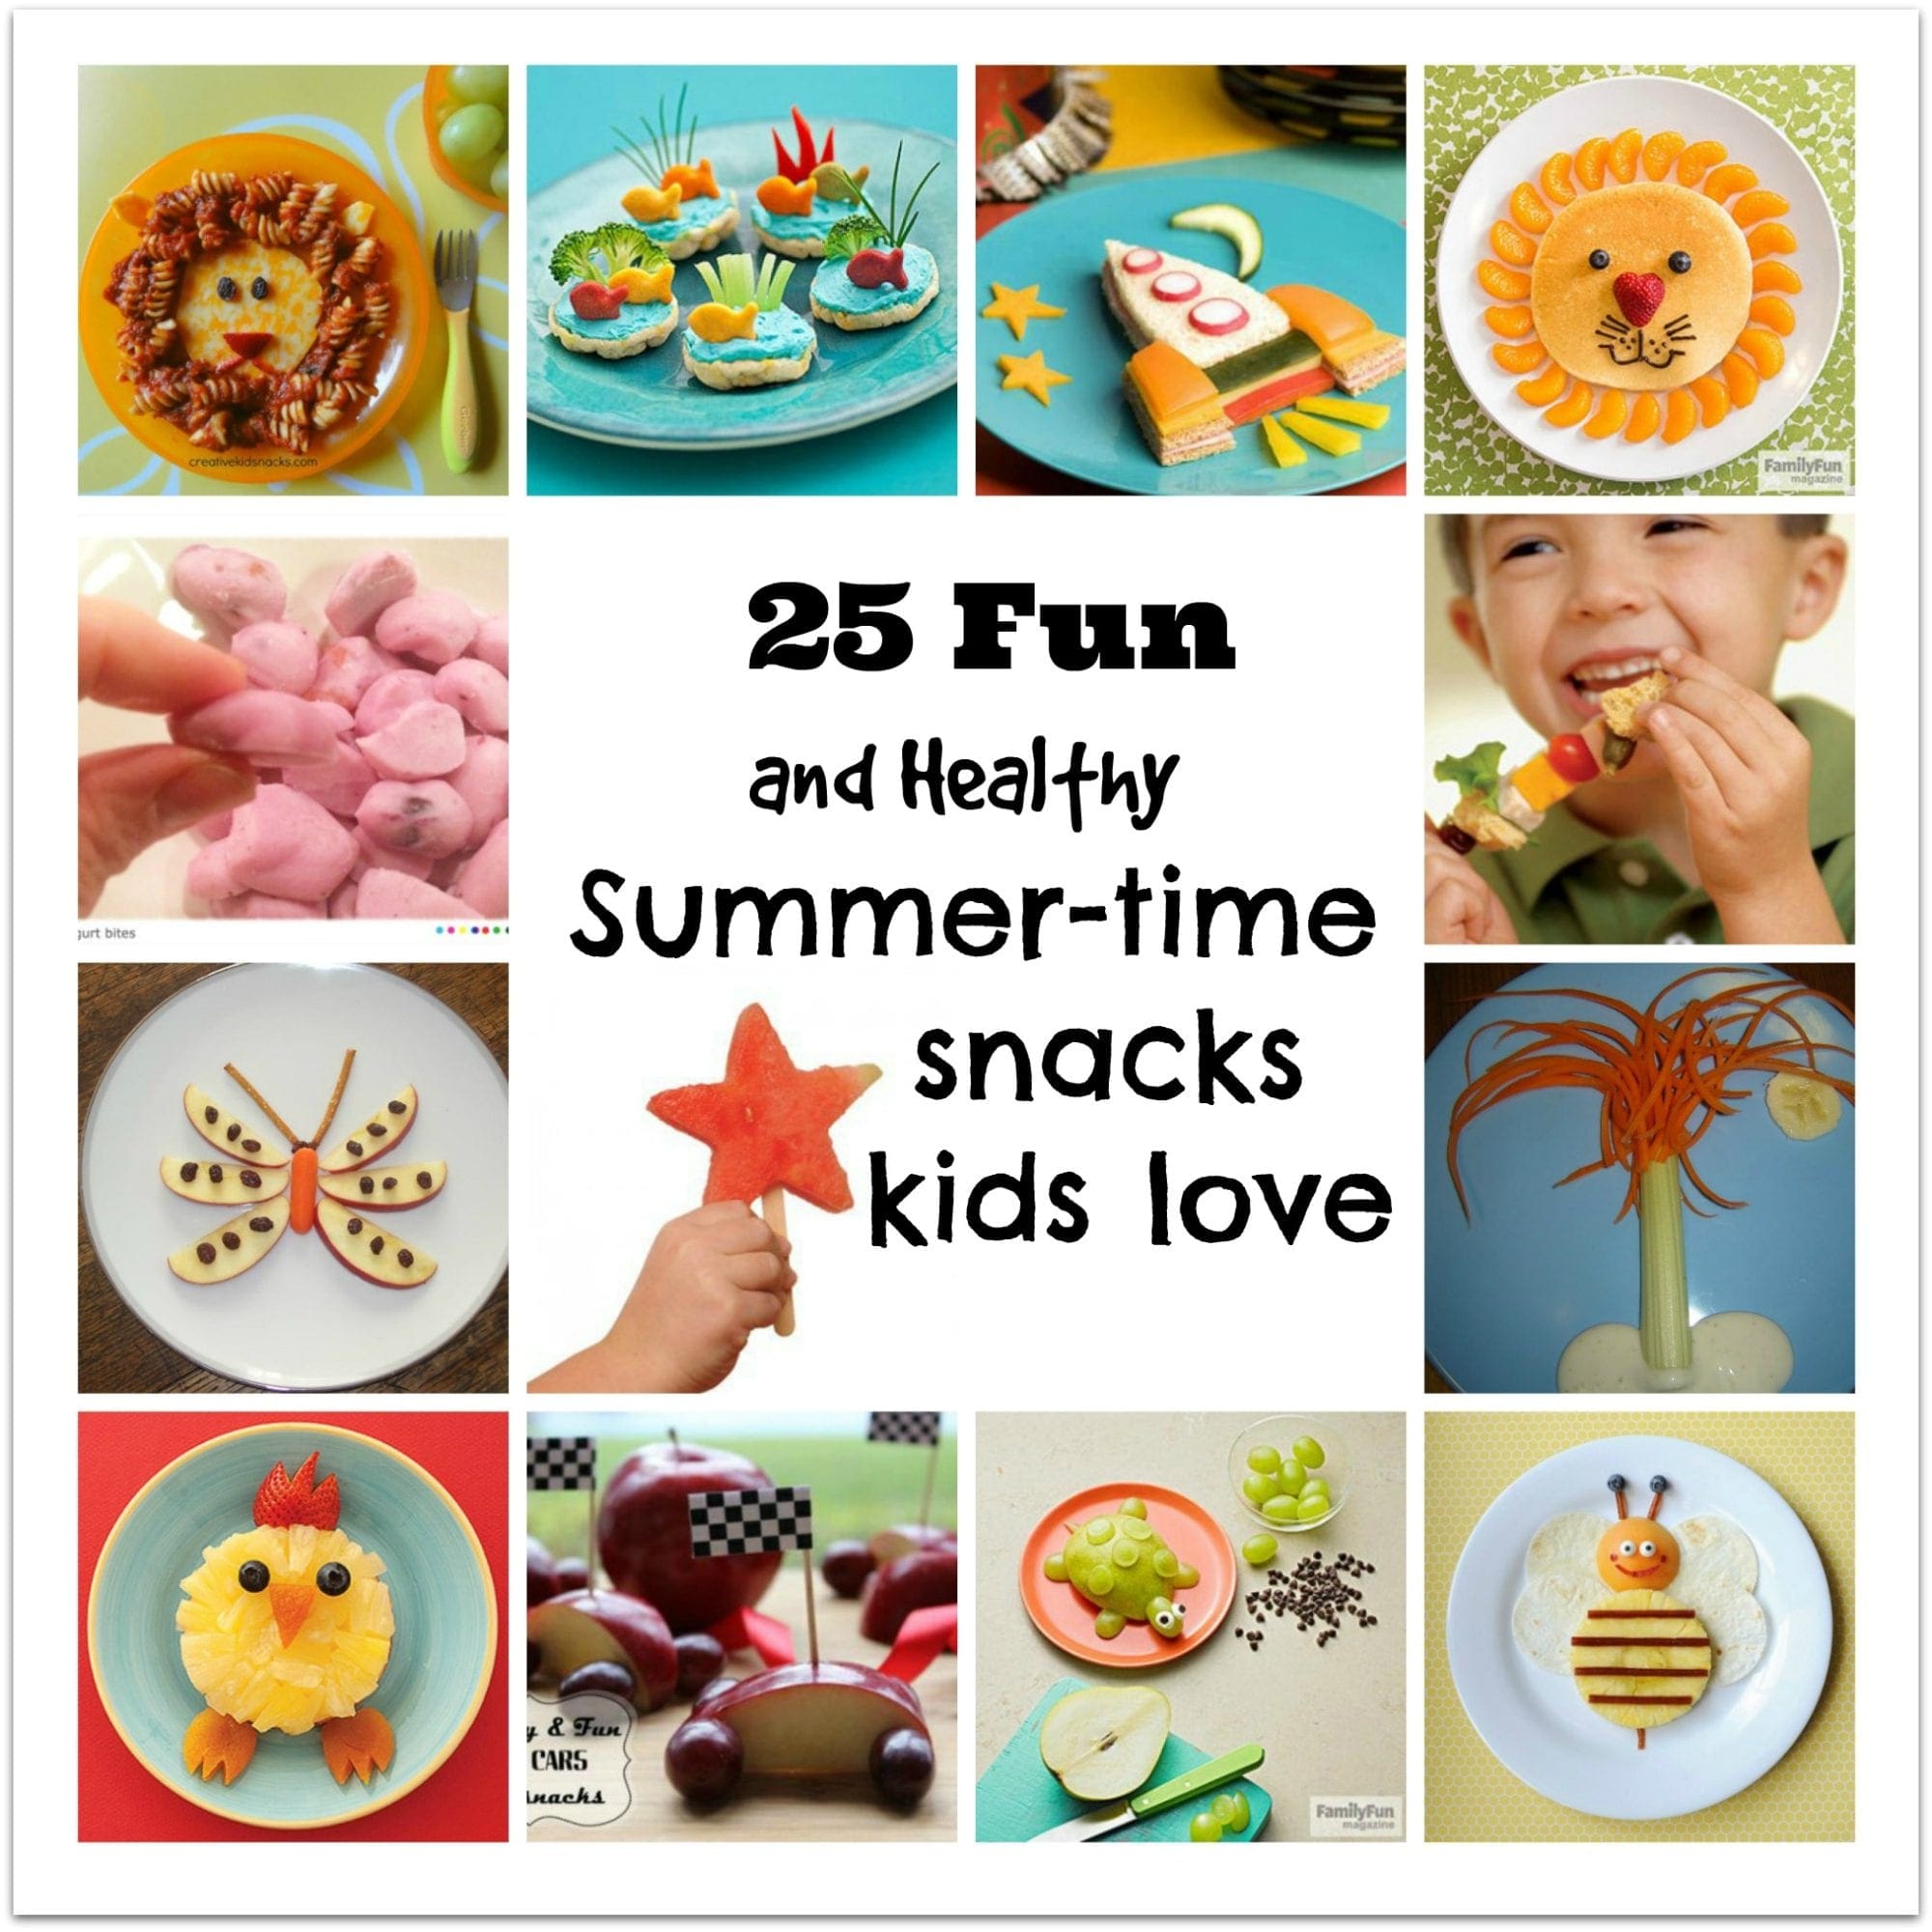 25 Super Cute Summer Snacks For Kids 